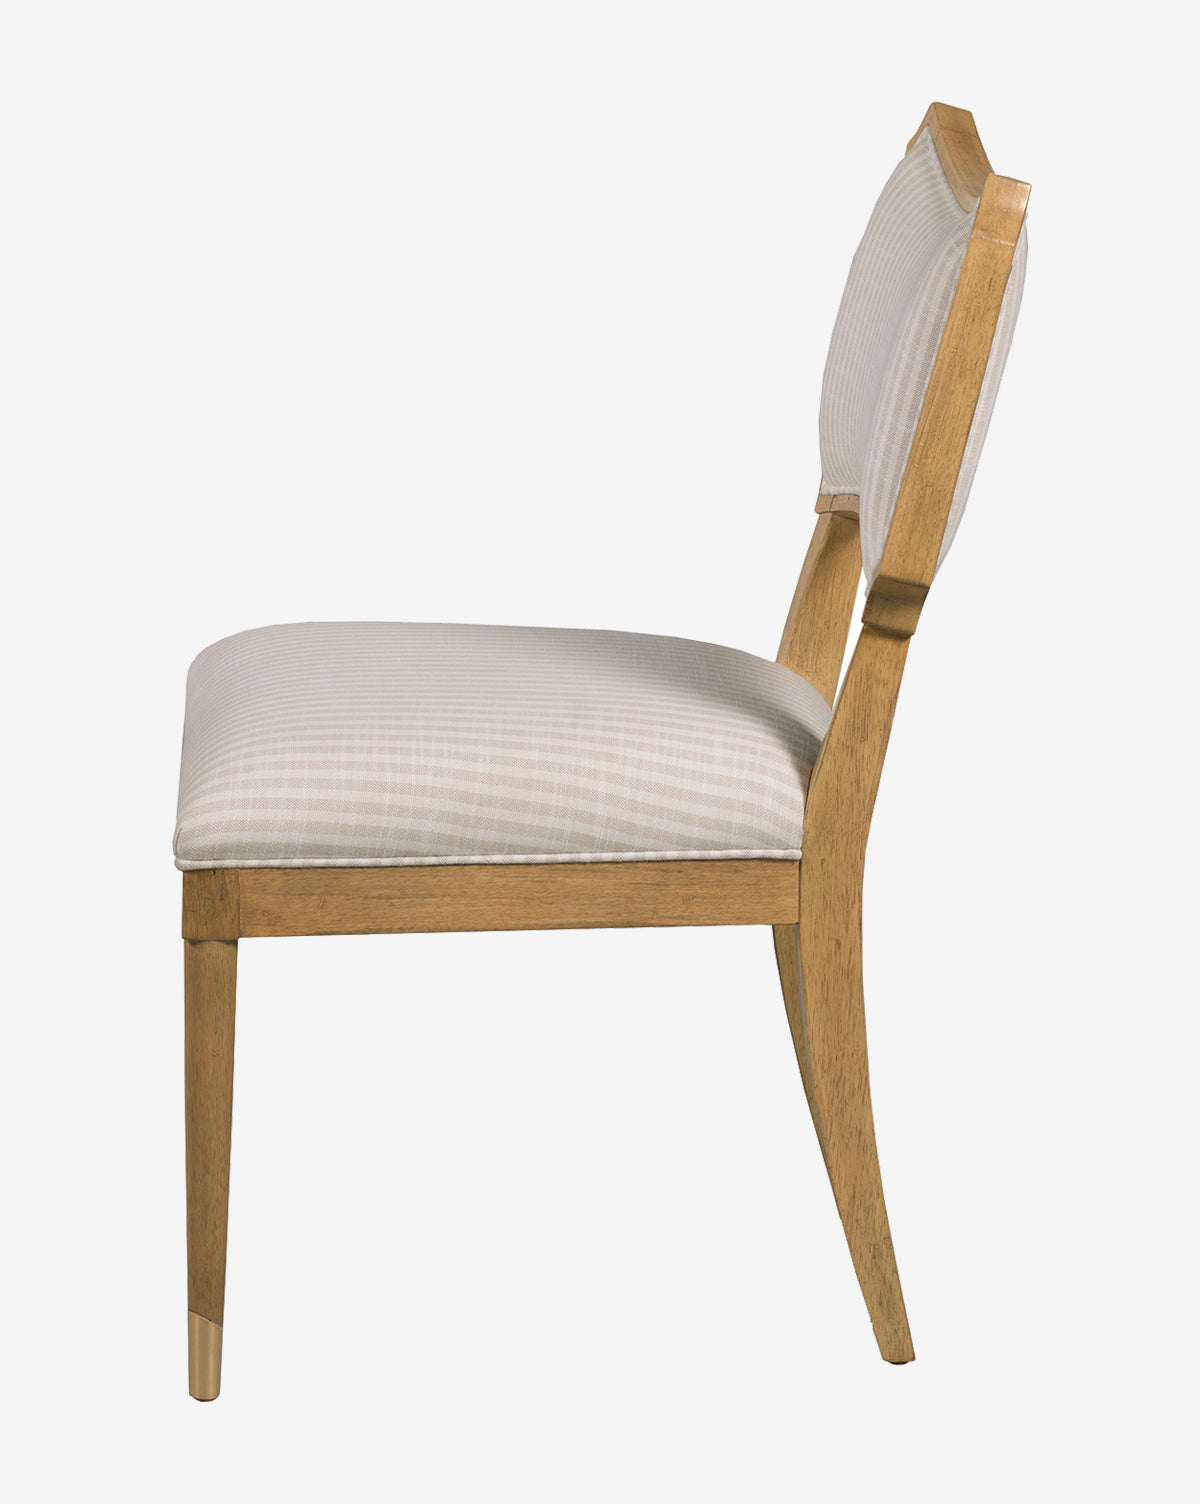 Woodbridge, Regan Chair